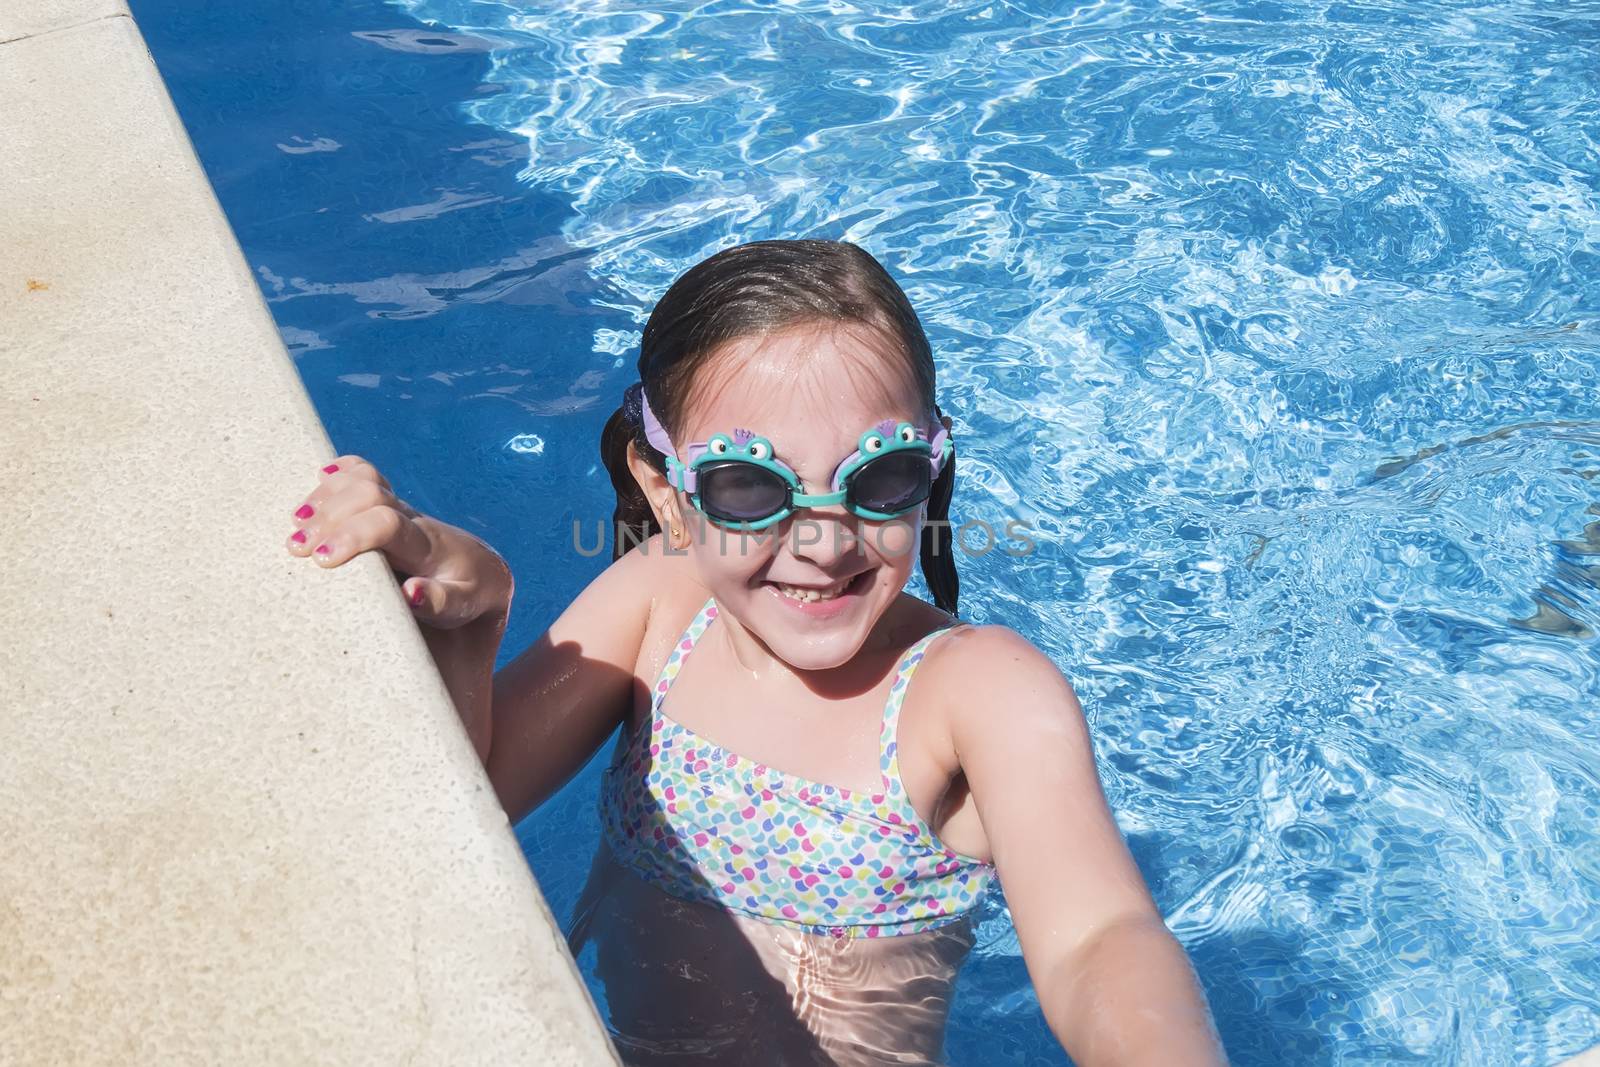 Smiling girl enjoying the pool in summer by max8xam